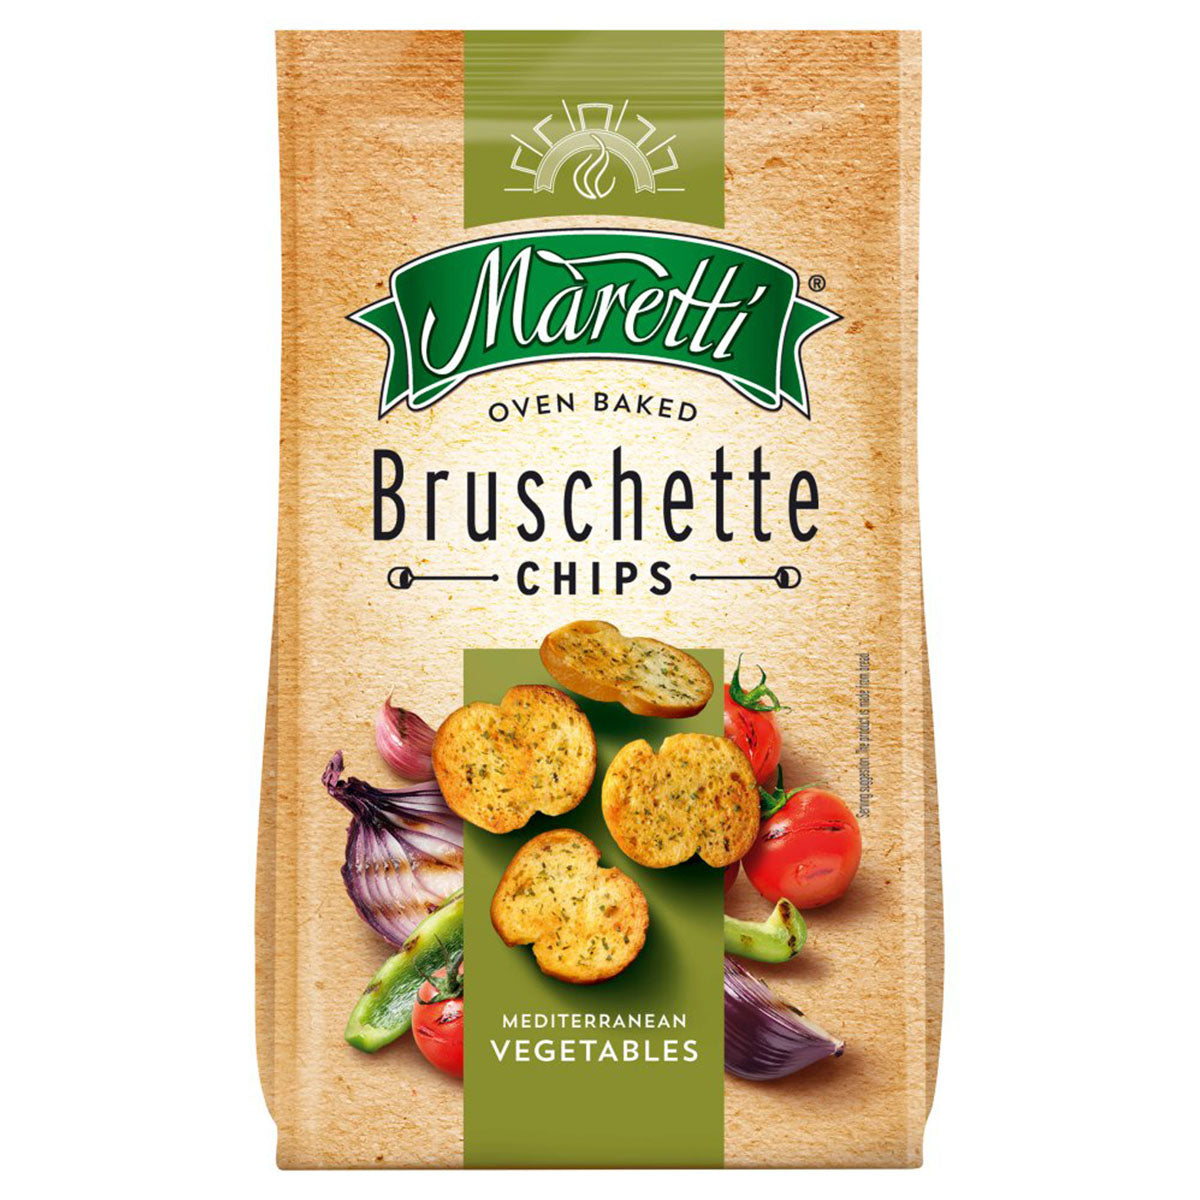 Maretti - Oven Baked Bruschette Chips Mediterranean Vegetables - 150g - Continental Food Store